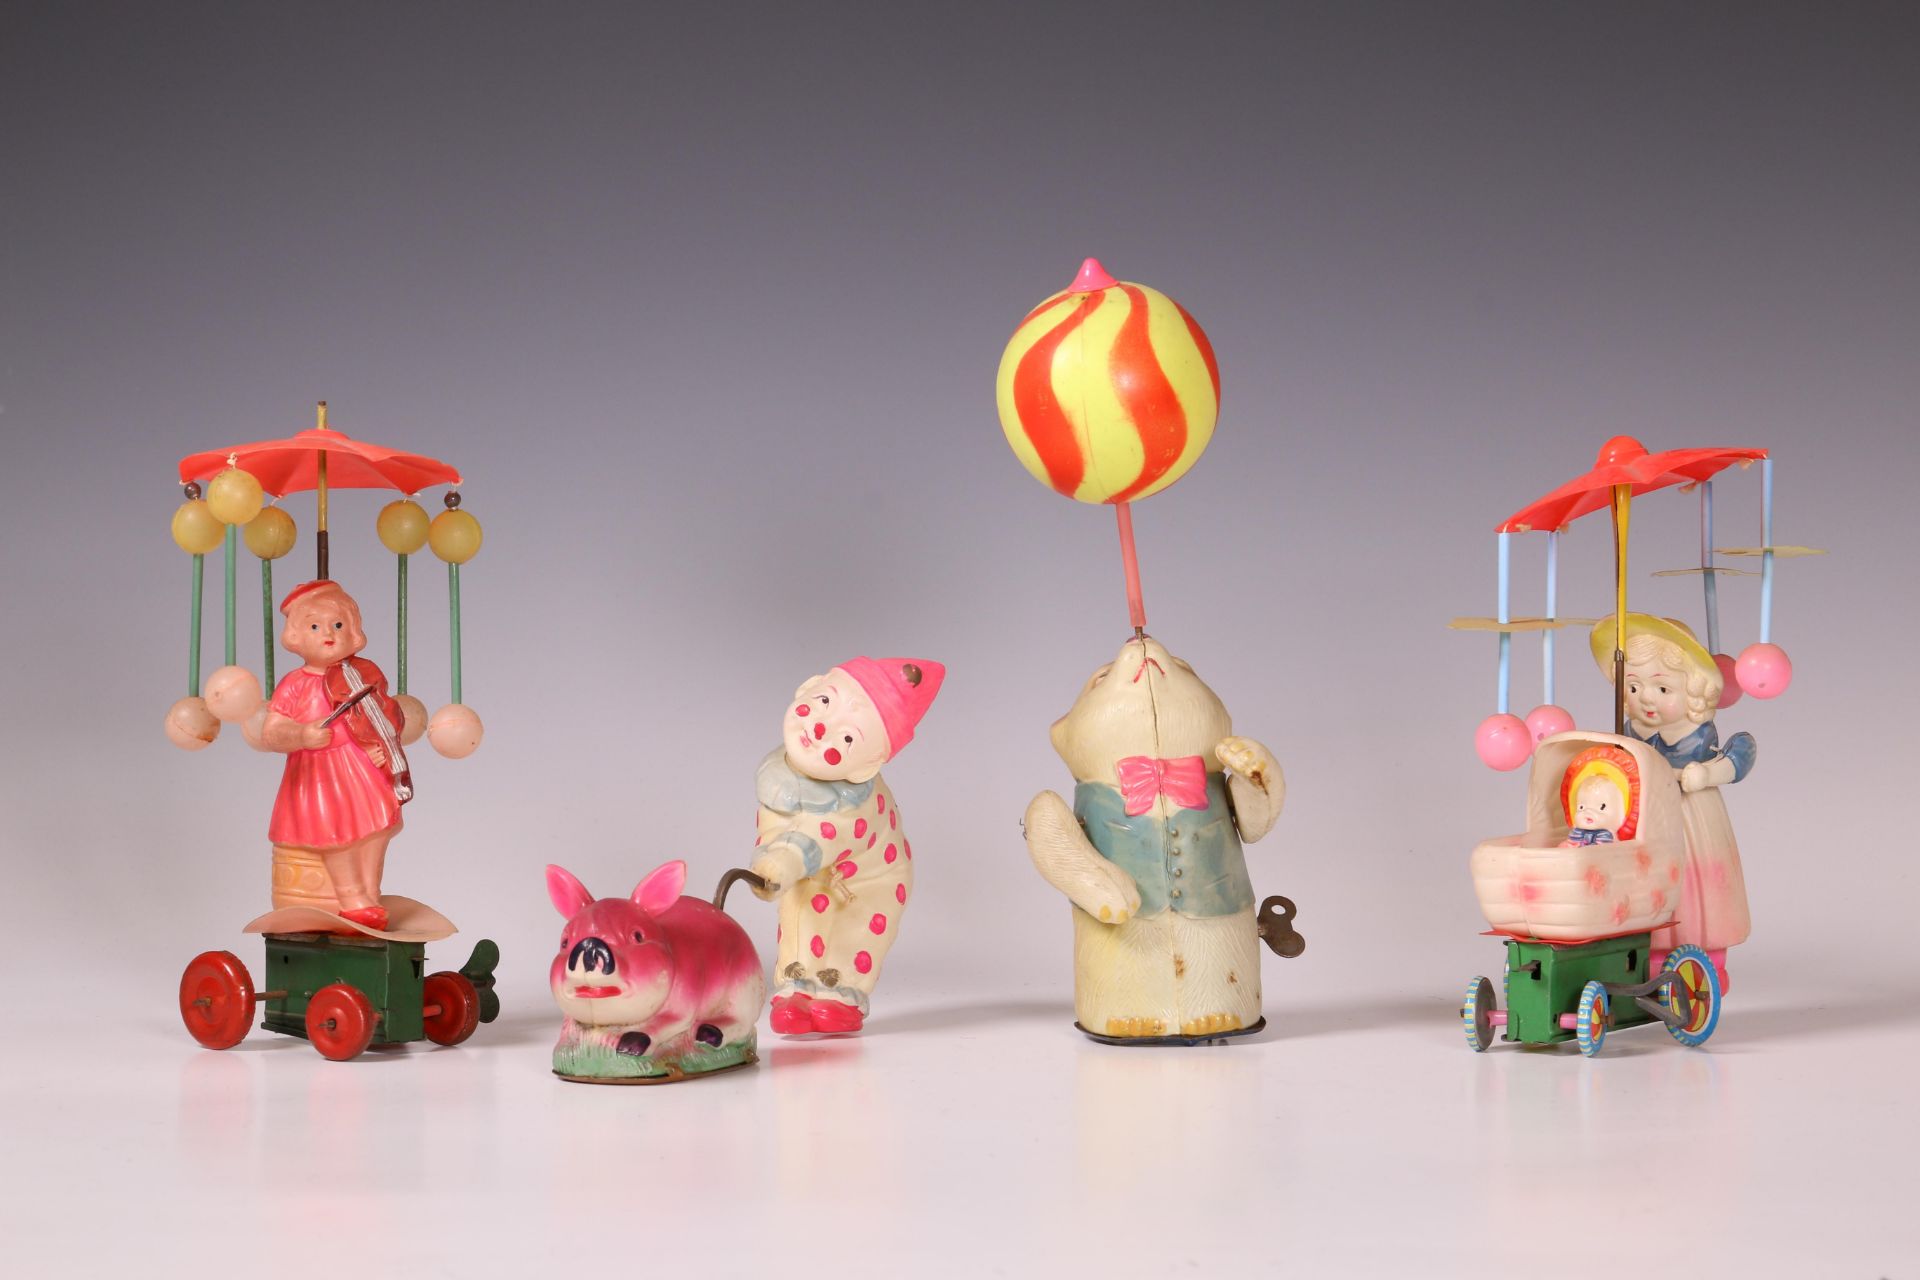 Japan, vier stuks celluloid speelgoed, ca. 1940-1950.